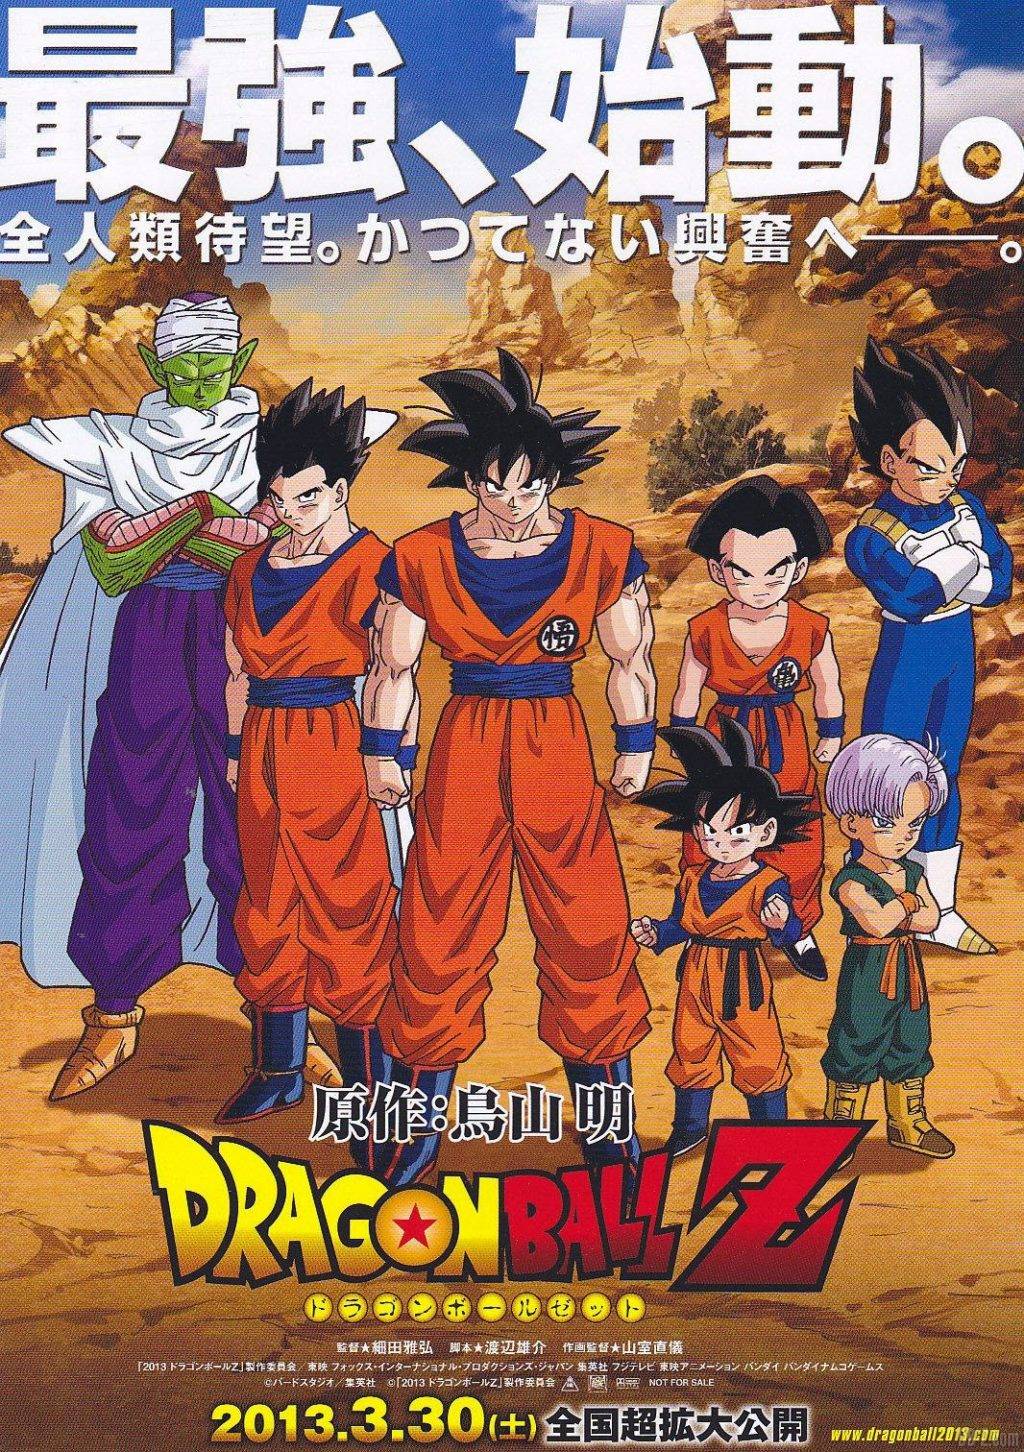 mrsbriefsdragonball: Dragon Ball New Movie Poster - Dragon Ball Z: Bio ...